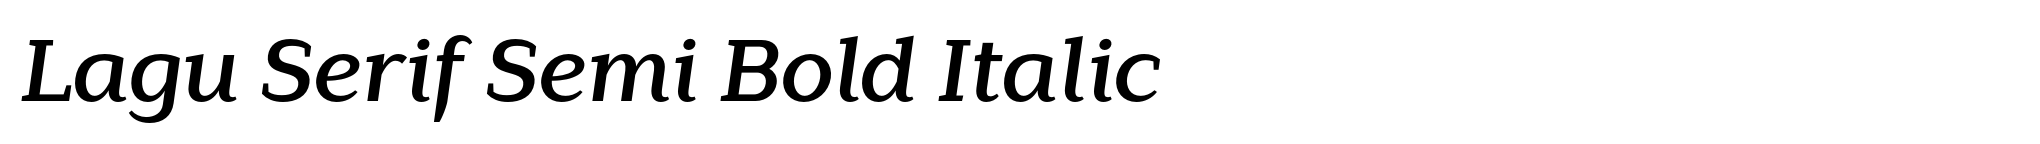 Lagu Serif Semi Bold Italic image